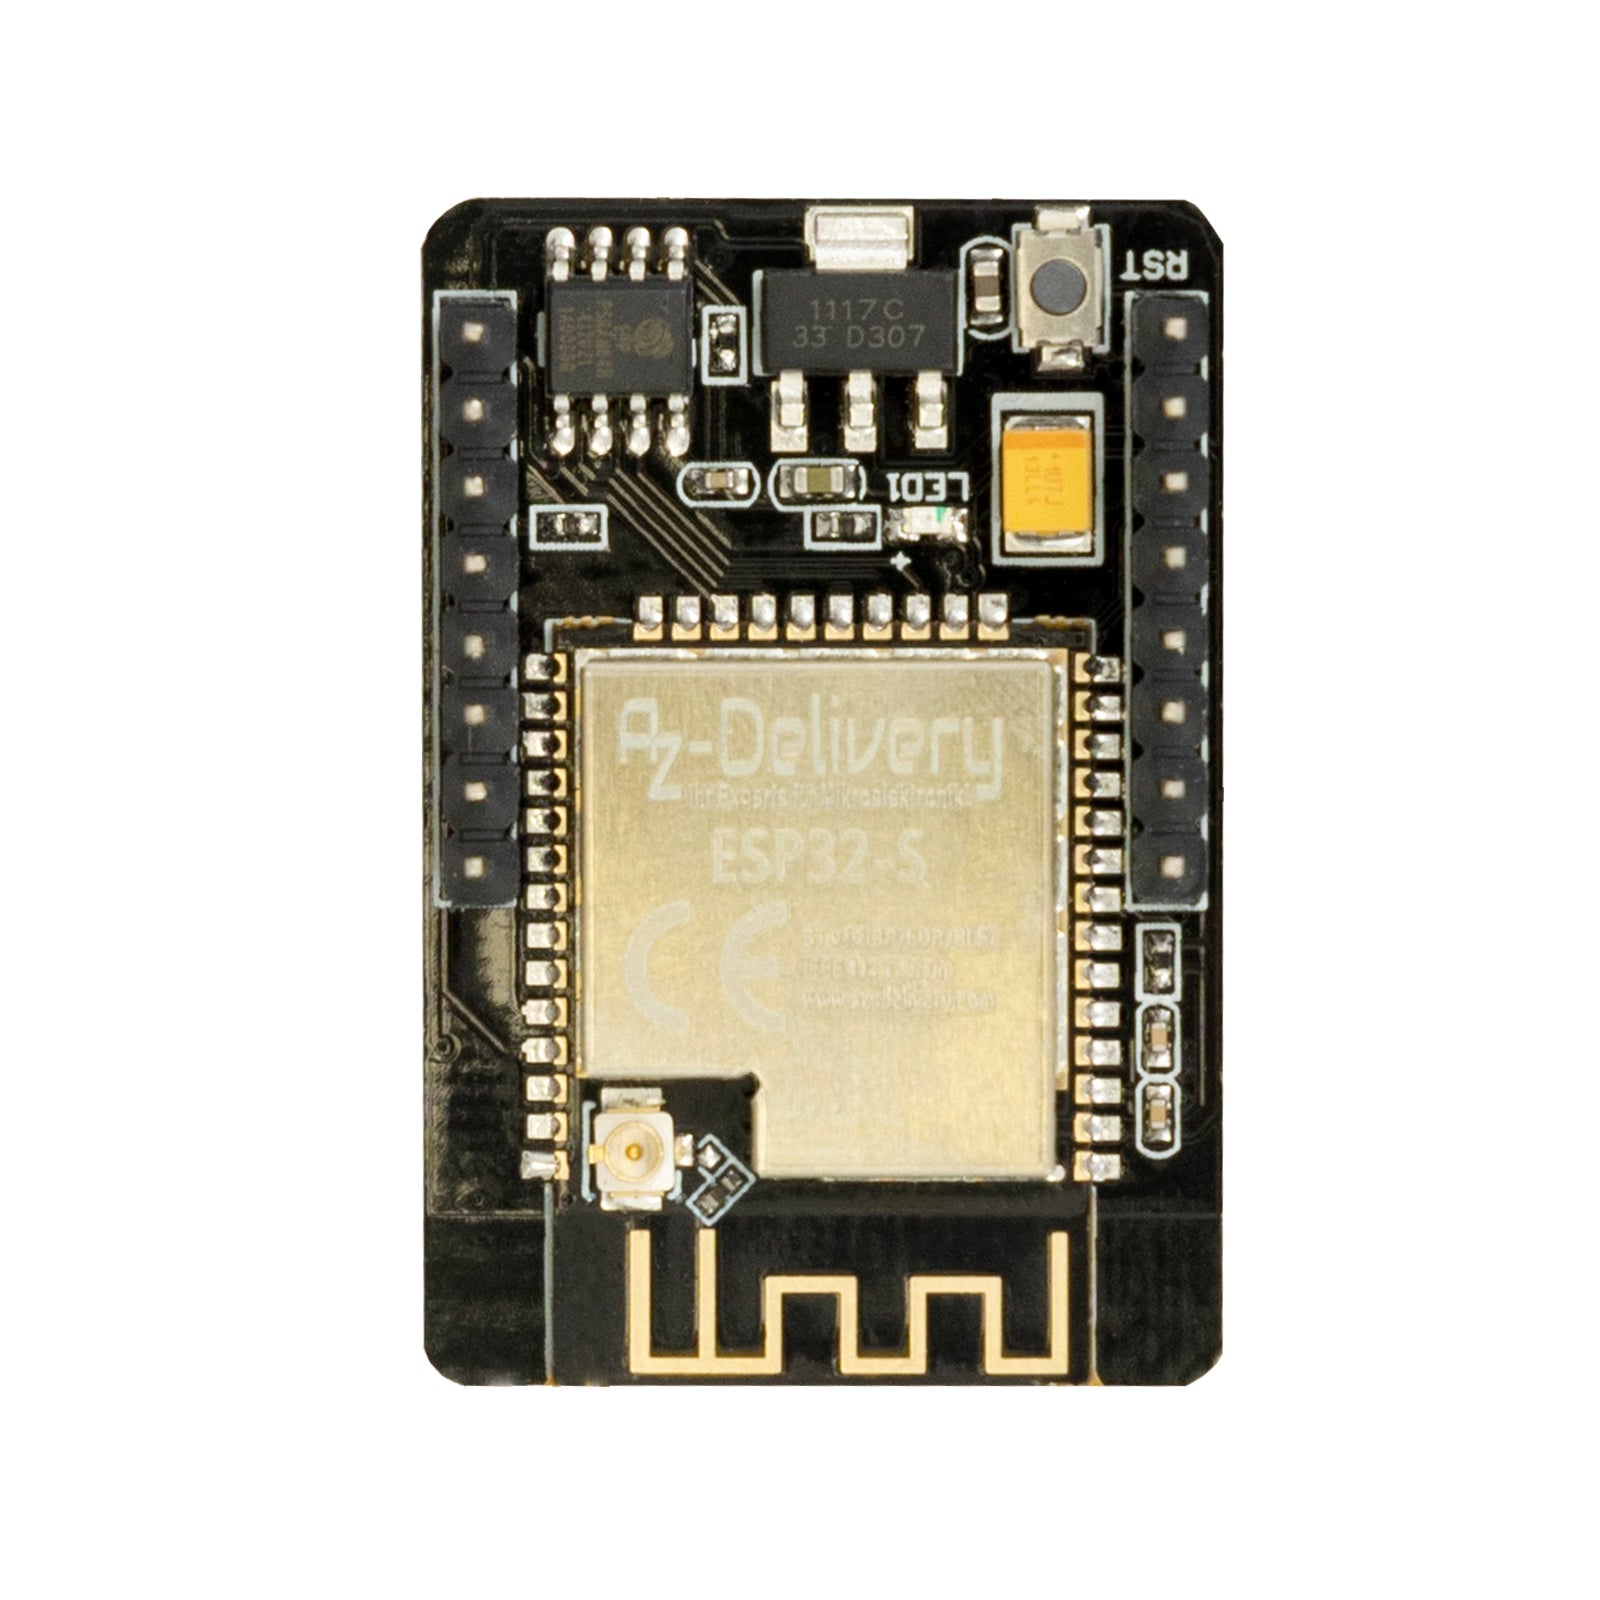 ESP32-Cam Kamera Modul (ESP32 Wifi/Bluetooth Modul inklusive Kamera) kompatibel mit Arduino - AZ-Delivery